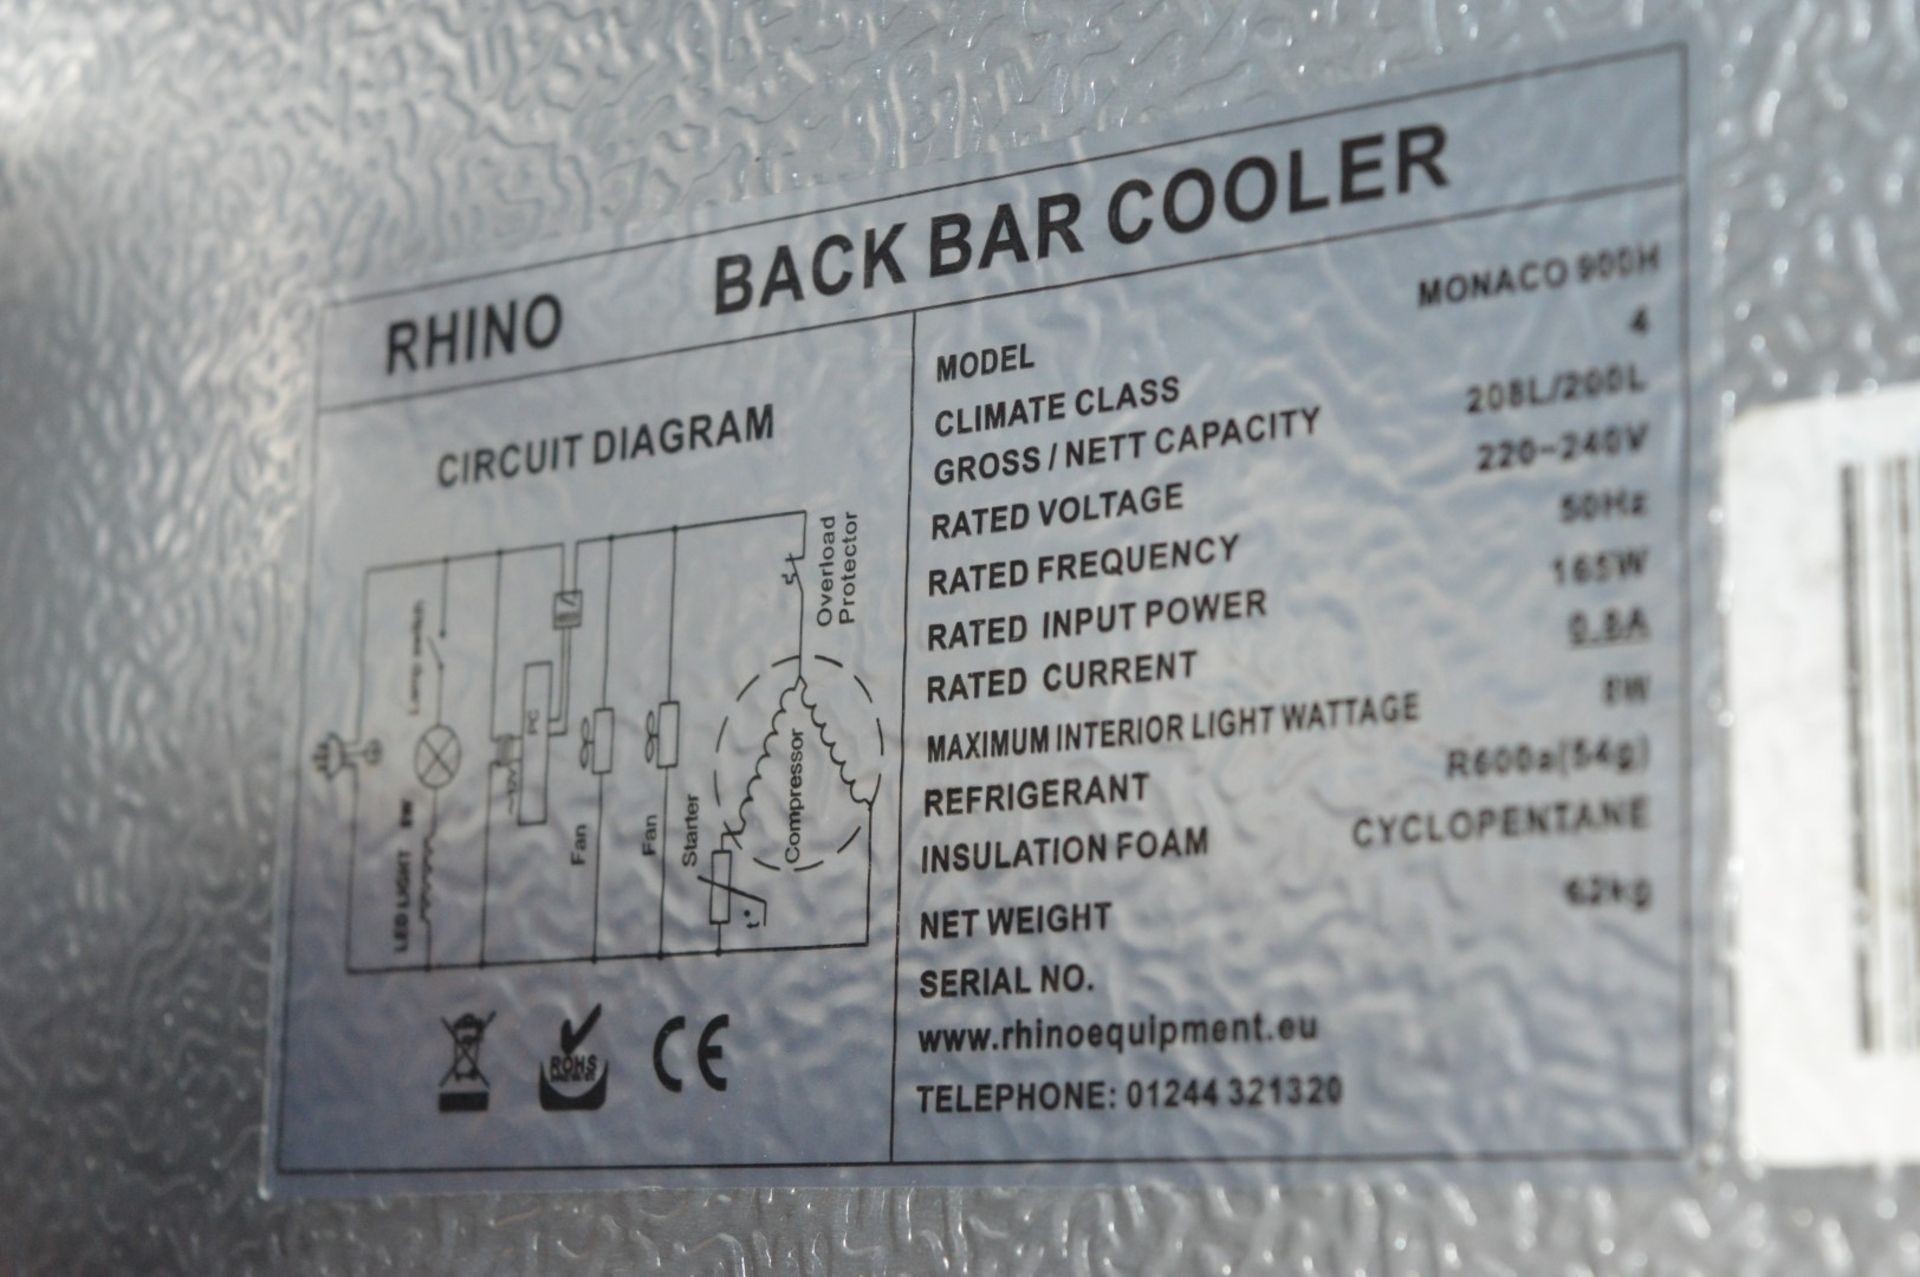 1 x Rhino Two Door Back Bar Bottle Cooler - Model Monaco 900H - CL180 - Dimensions H90 x W90 x - Image 3 of 4